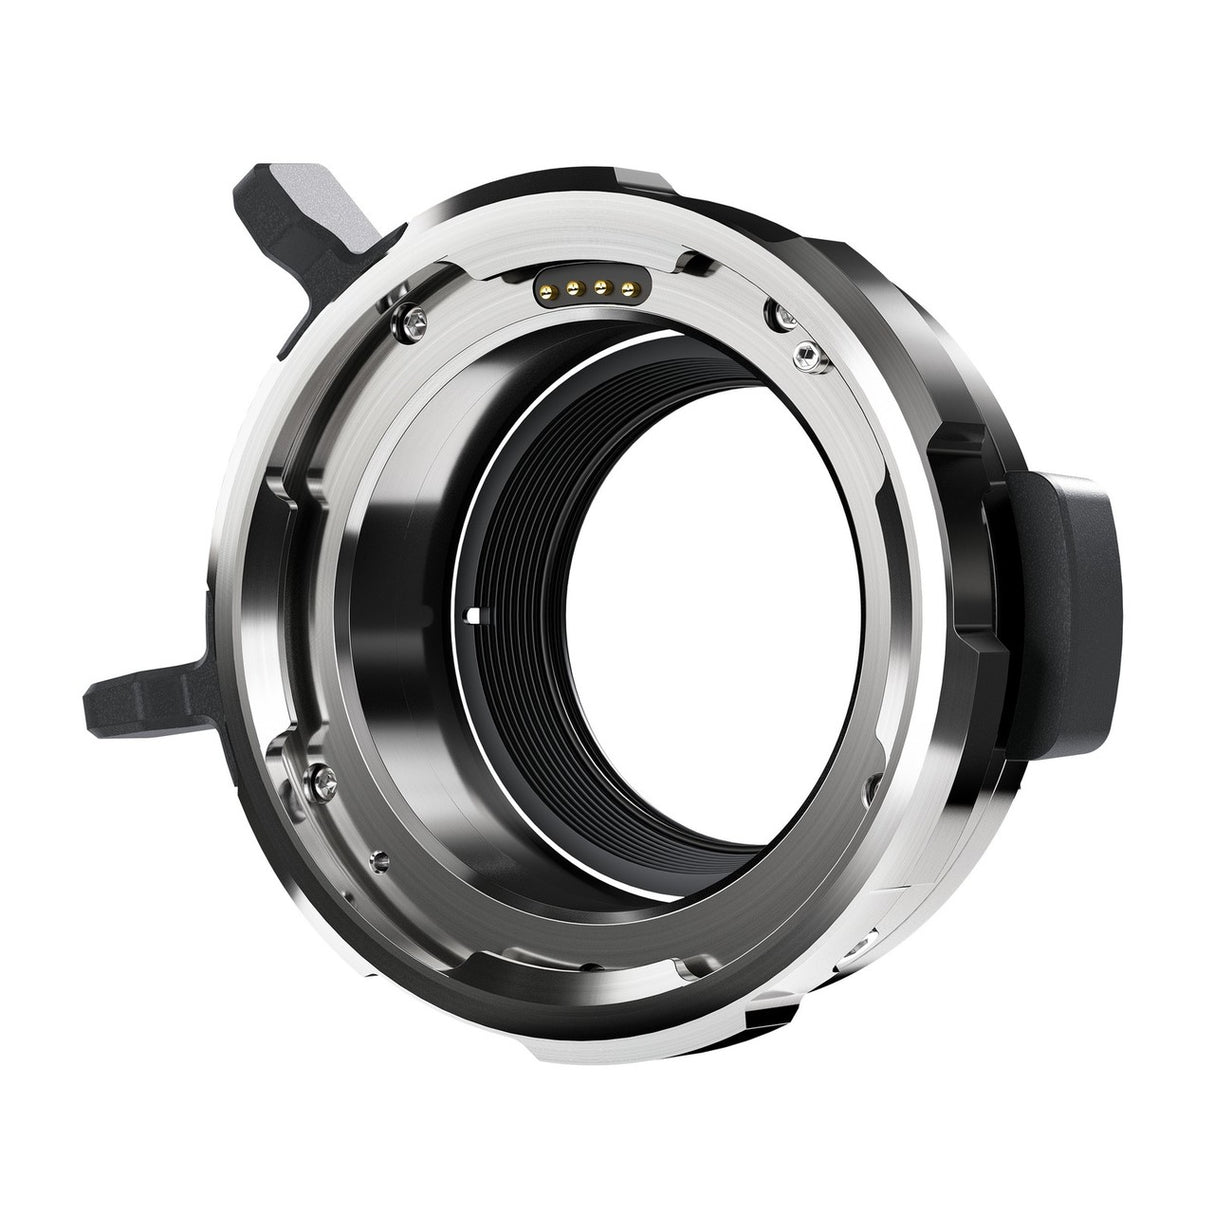 Blackmagic Design URSA Mini Pro PL Mount | Optional PL Lens Mount